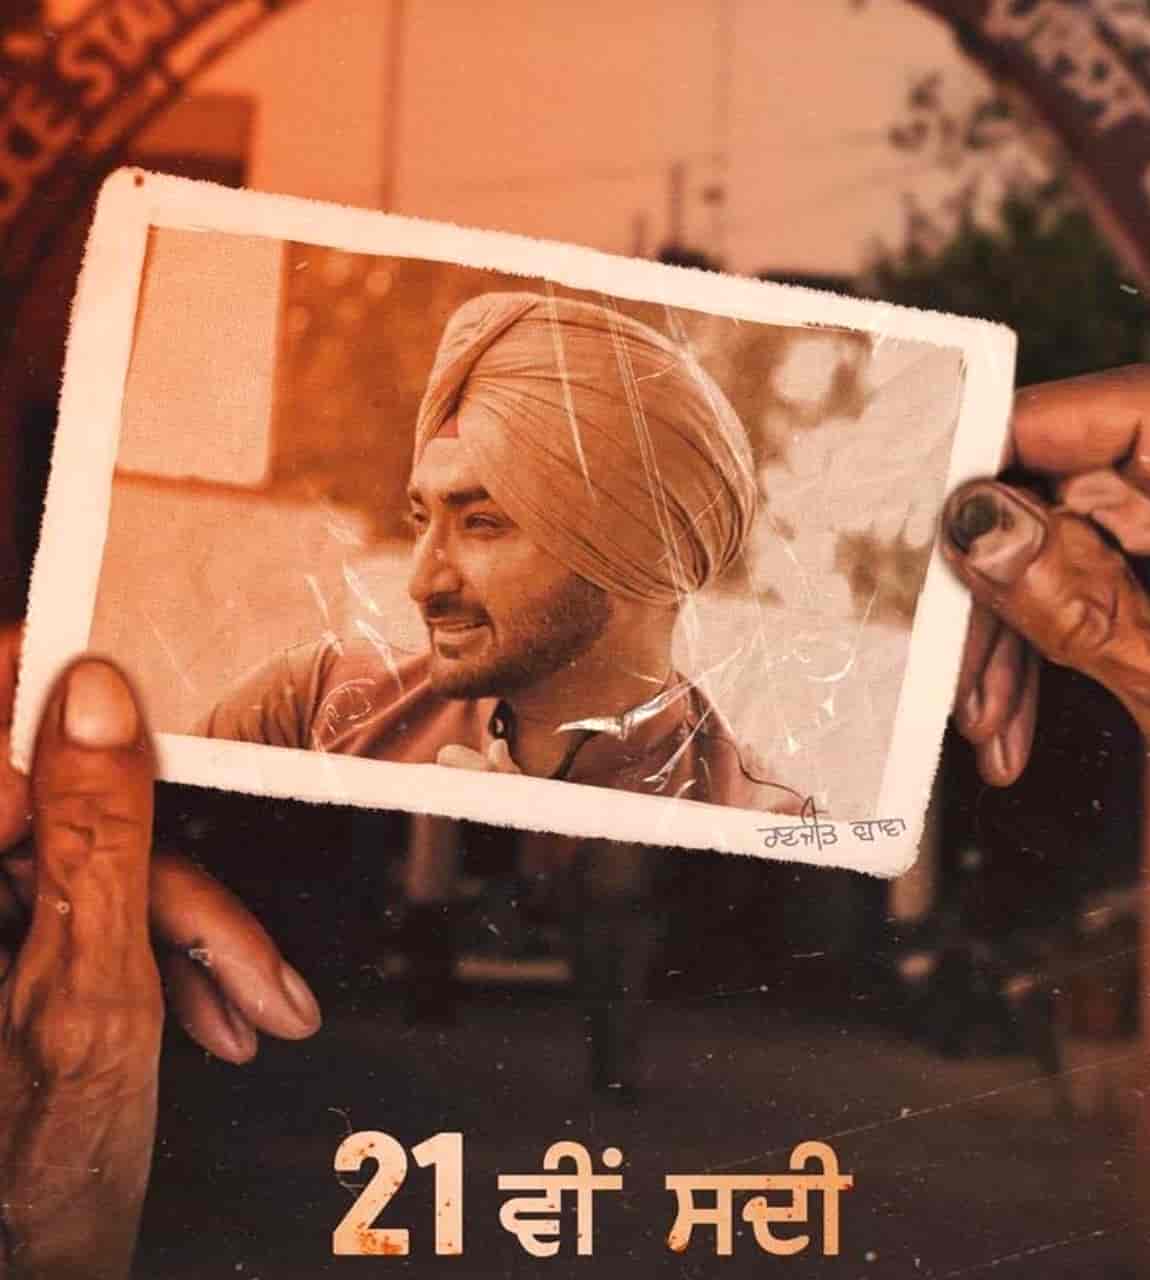 21 Vi Sdi Punjabi Song Image Features Ranjit Bawa